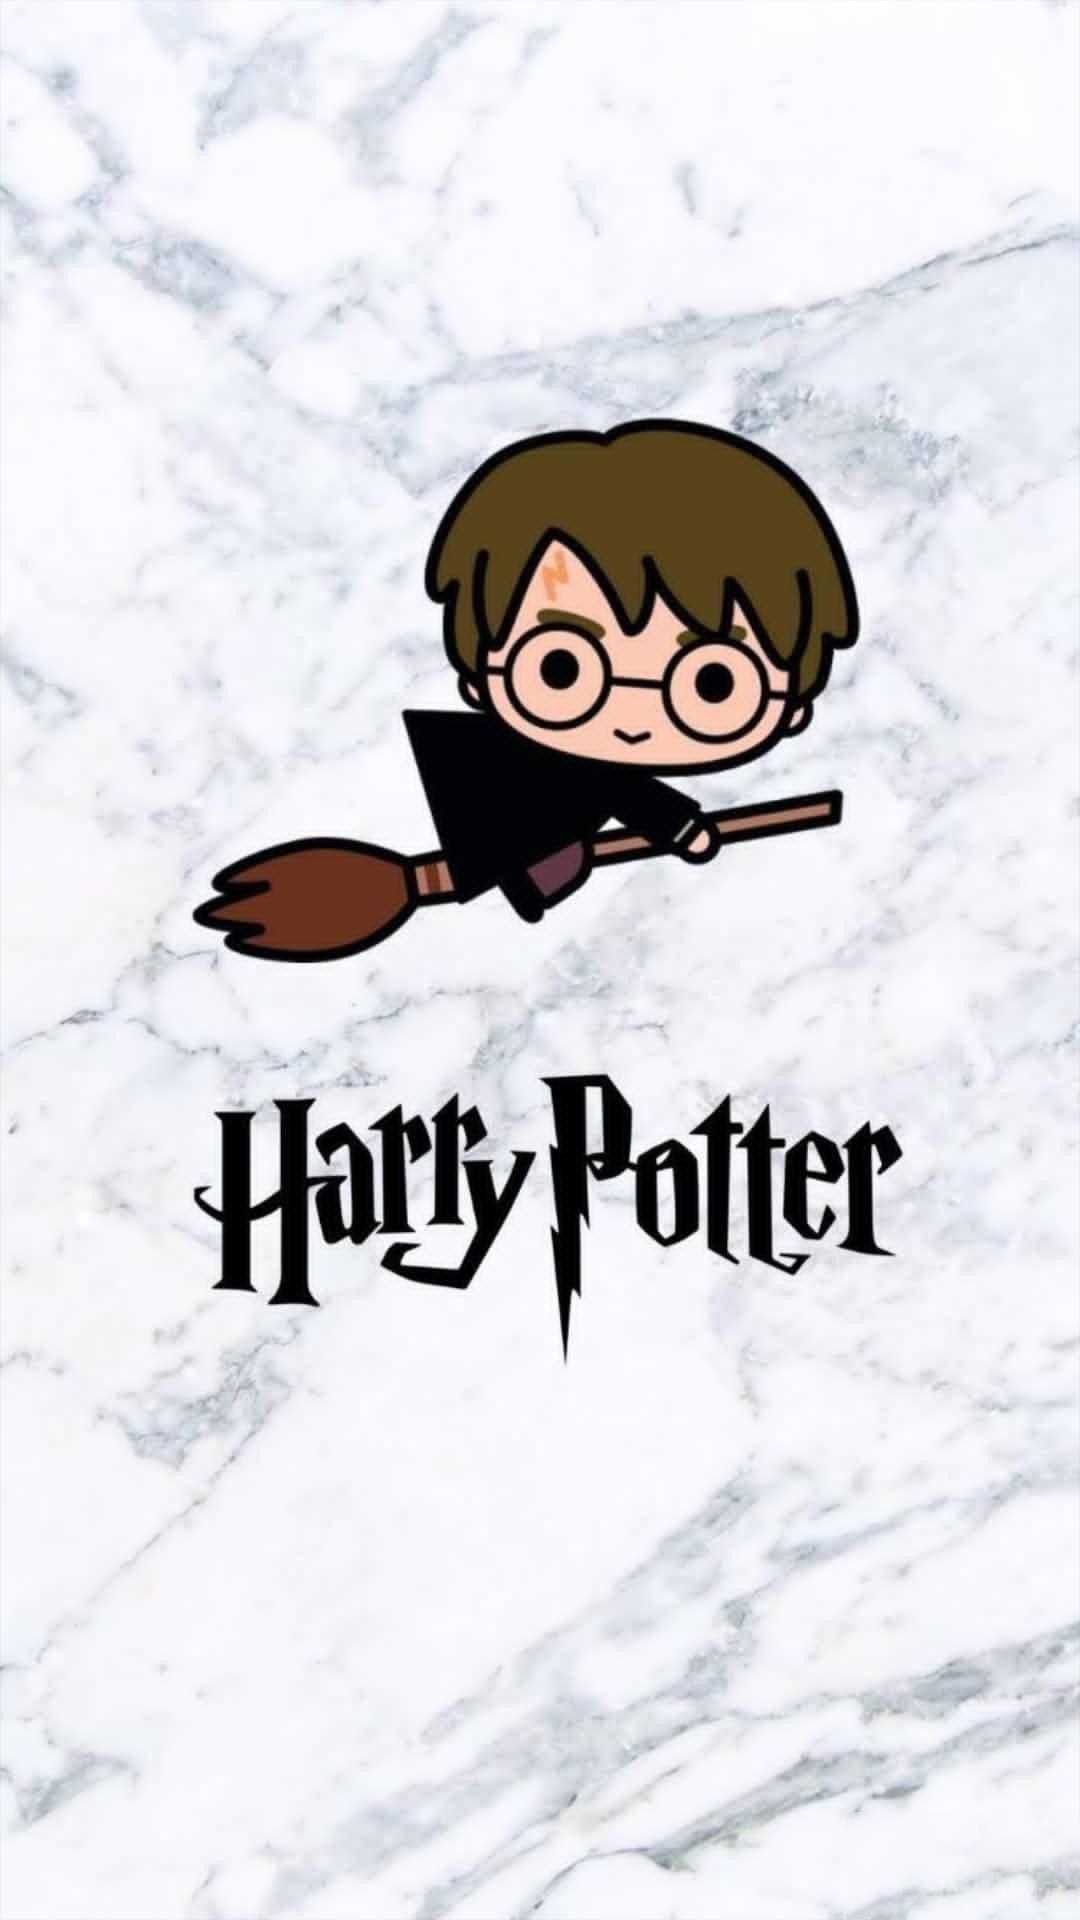 Harry Potter wallpaper  Immagini di harry potter Dipinti artistici  Scultura di carta